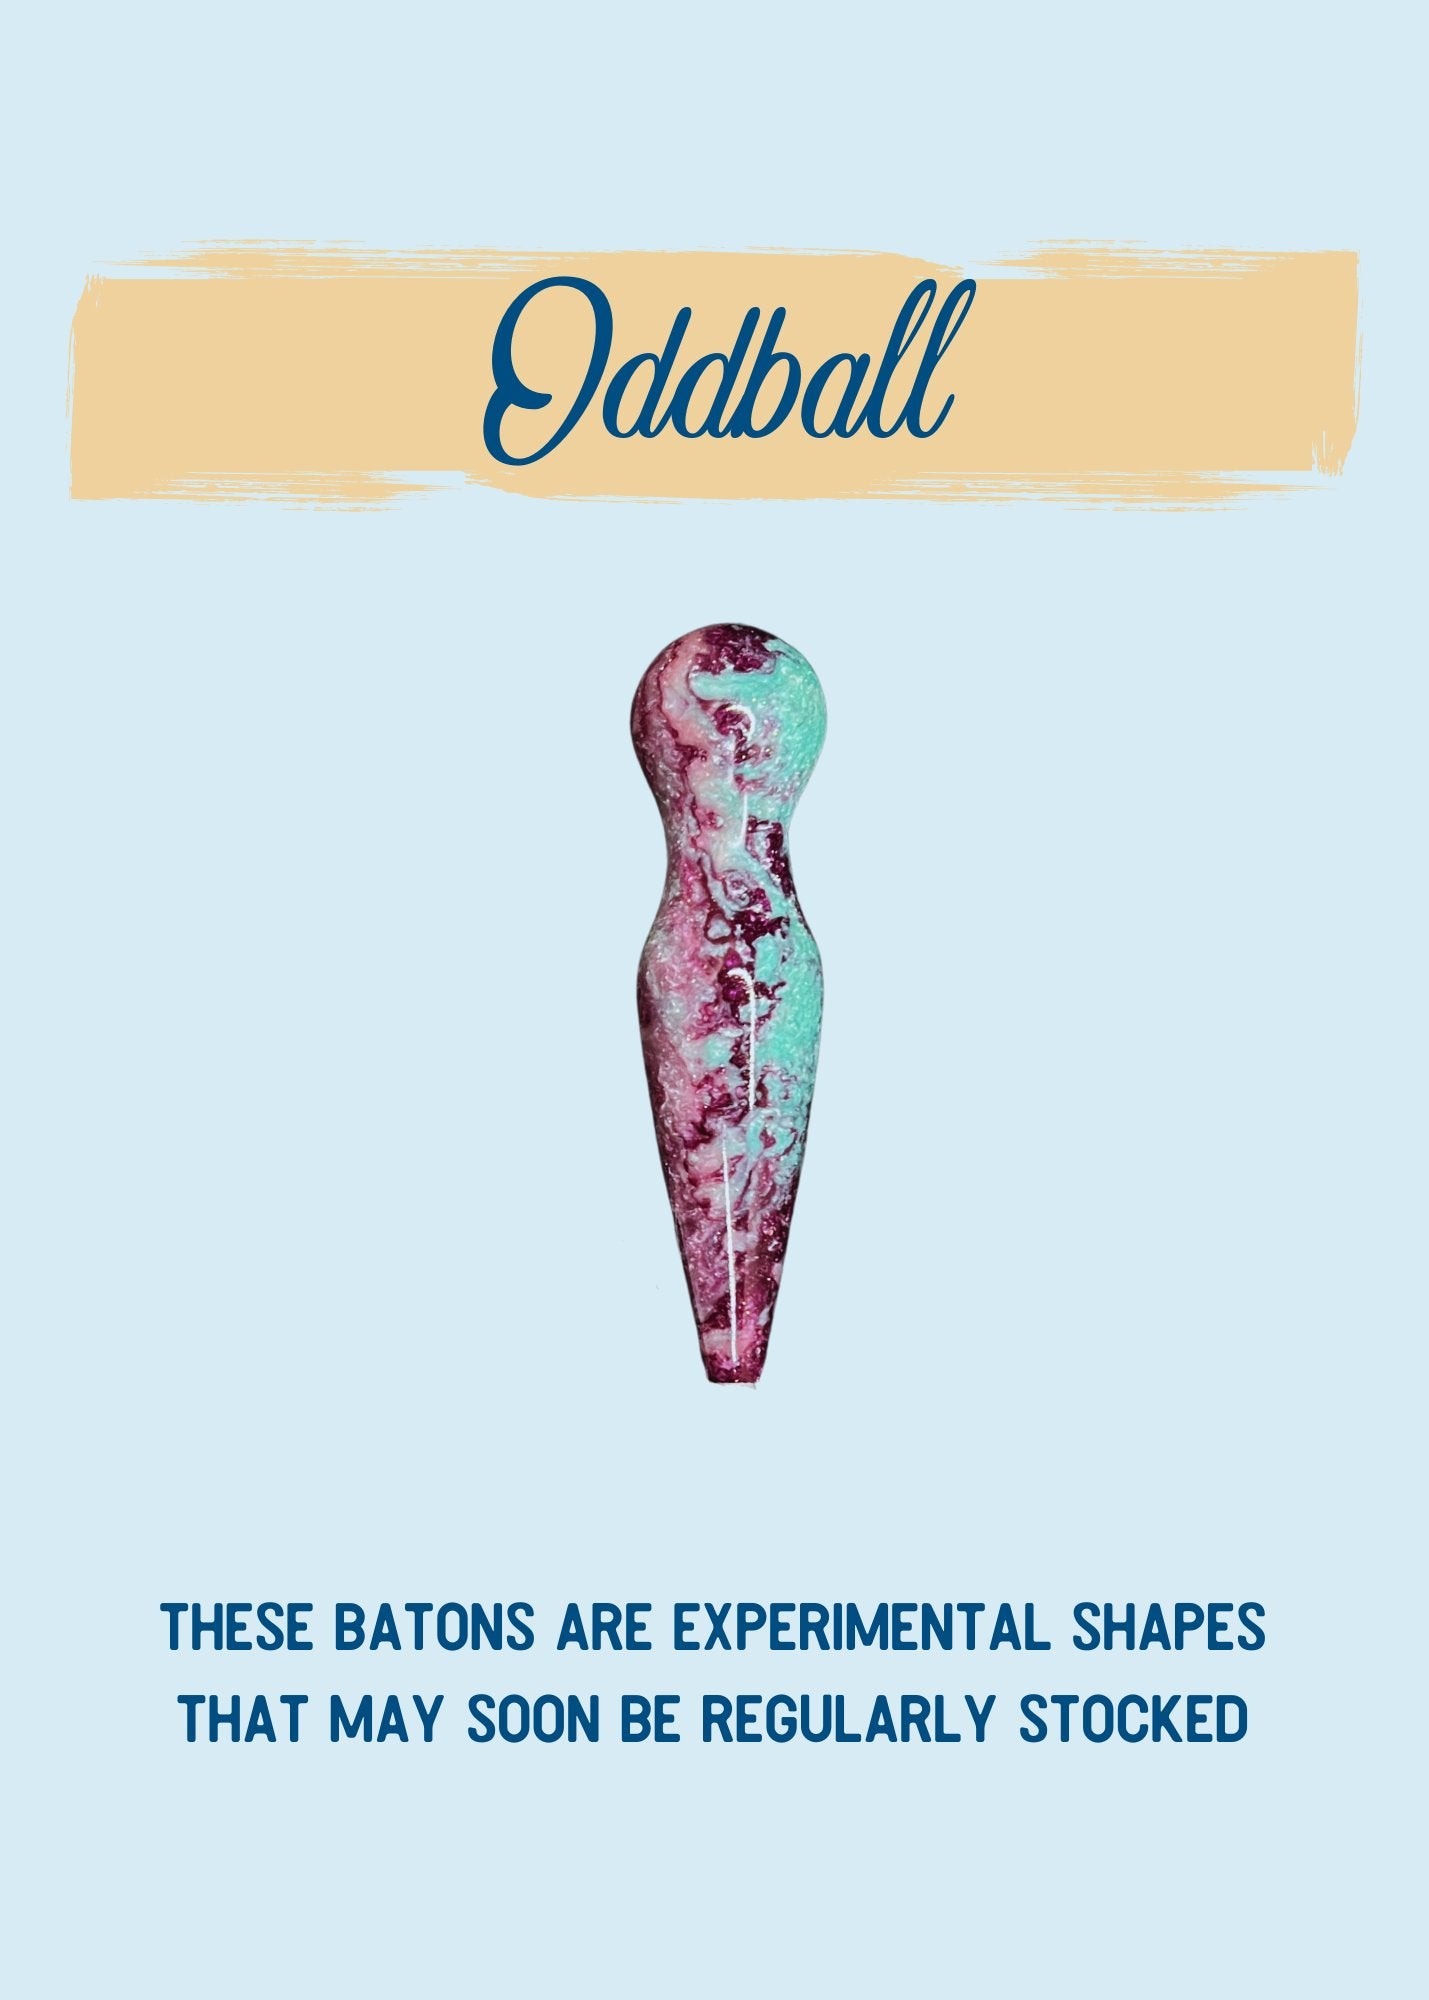 Event Oddball Batons